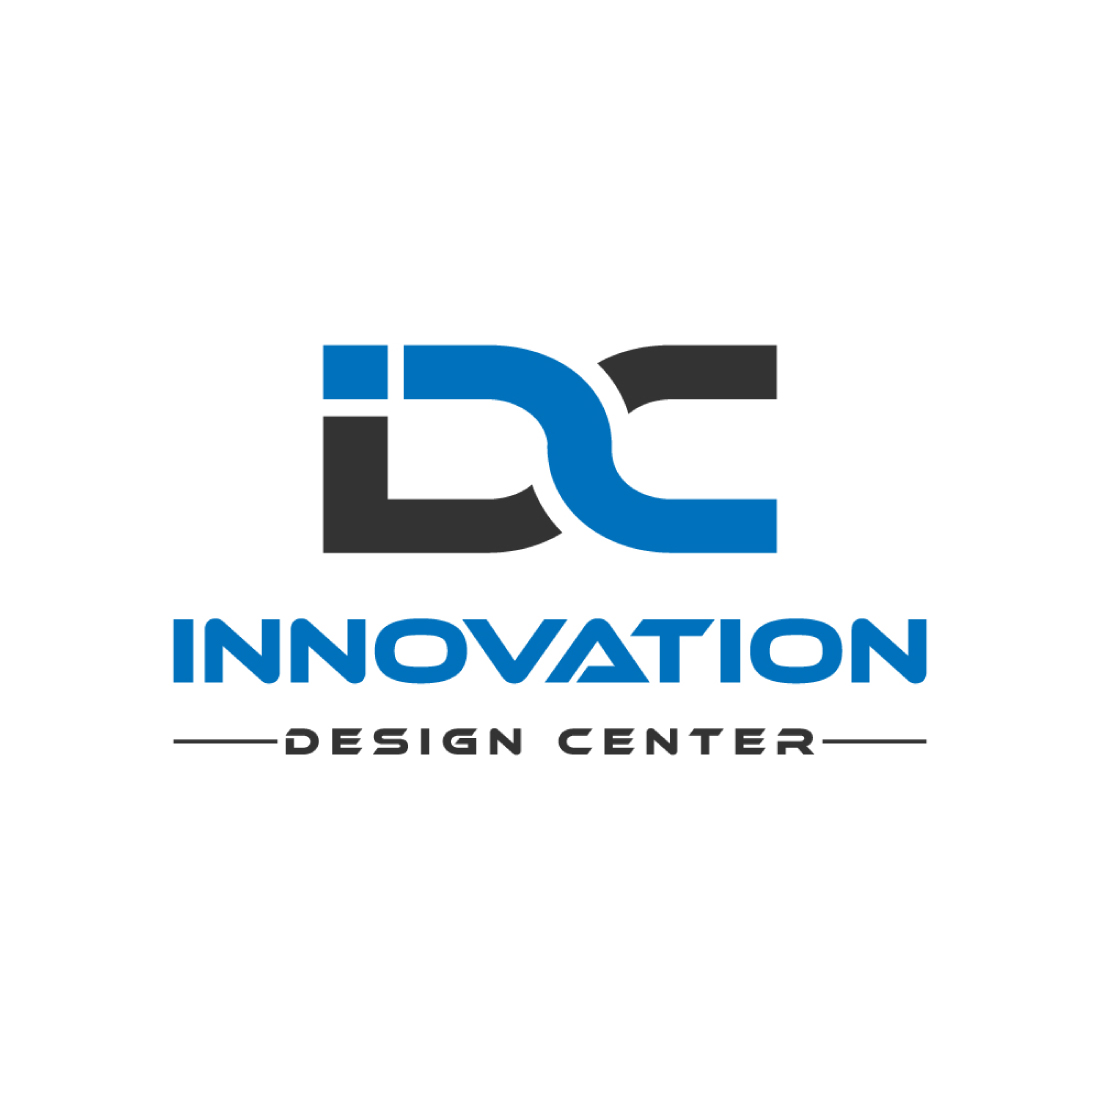 IDC logo preview image.